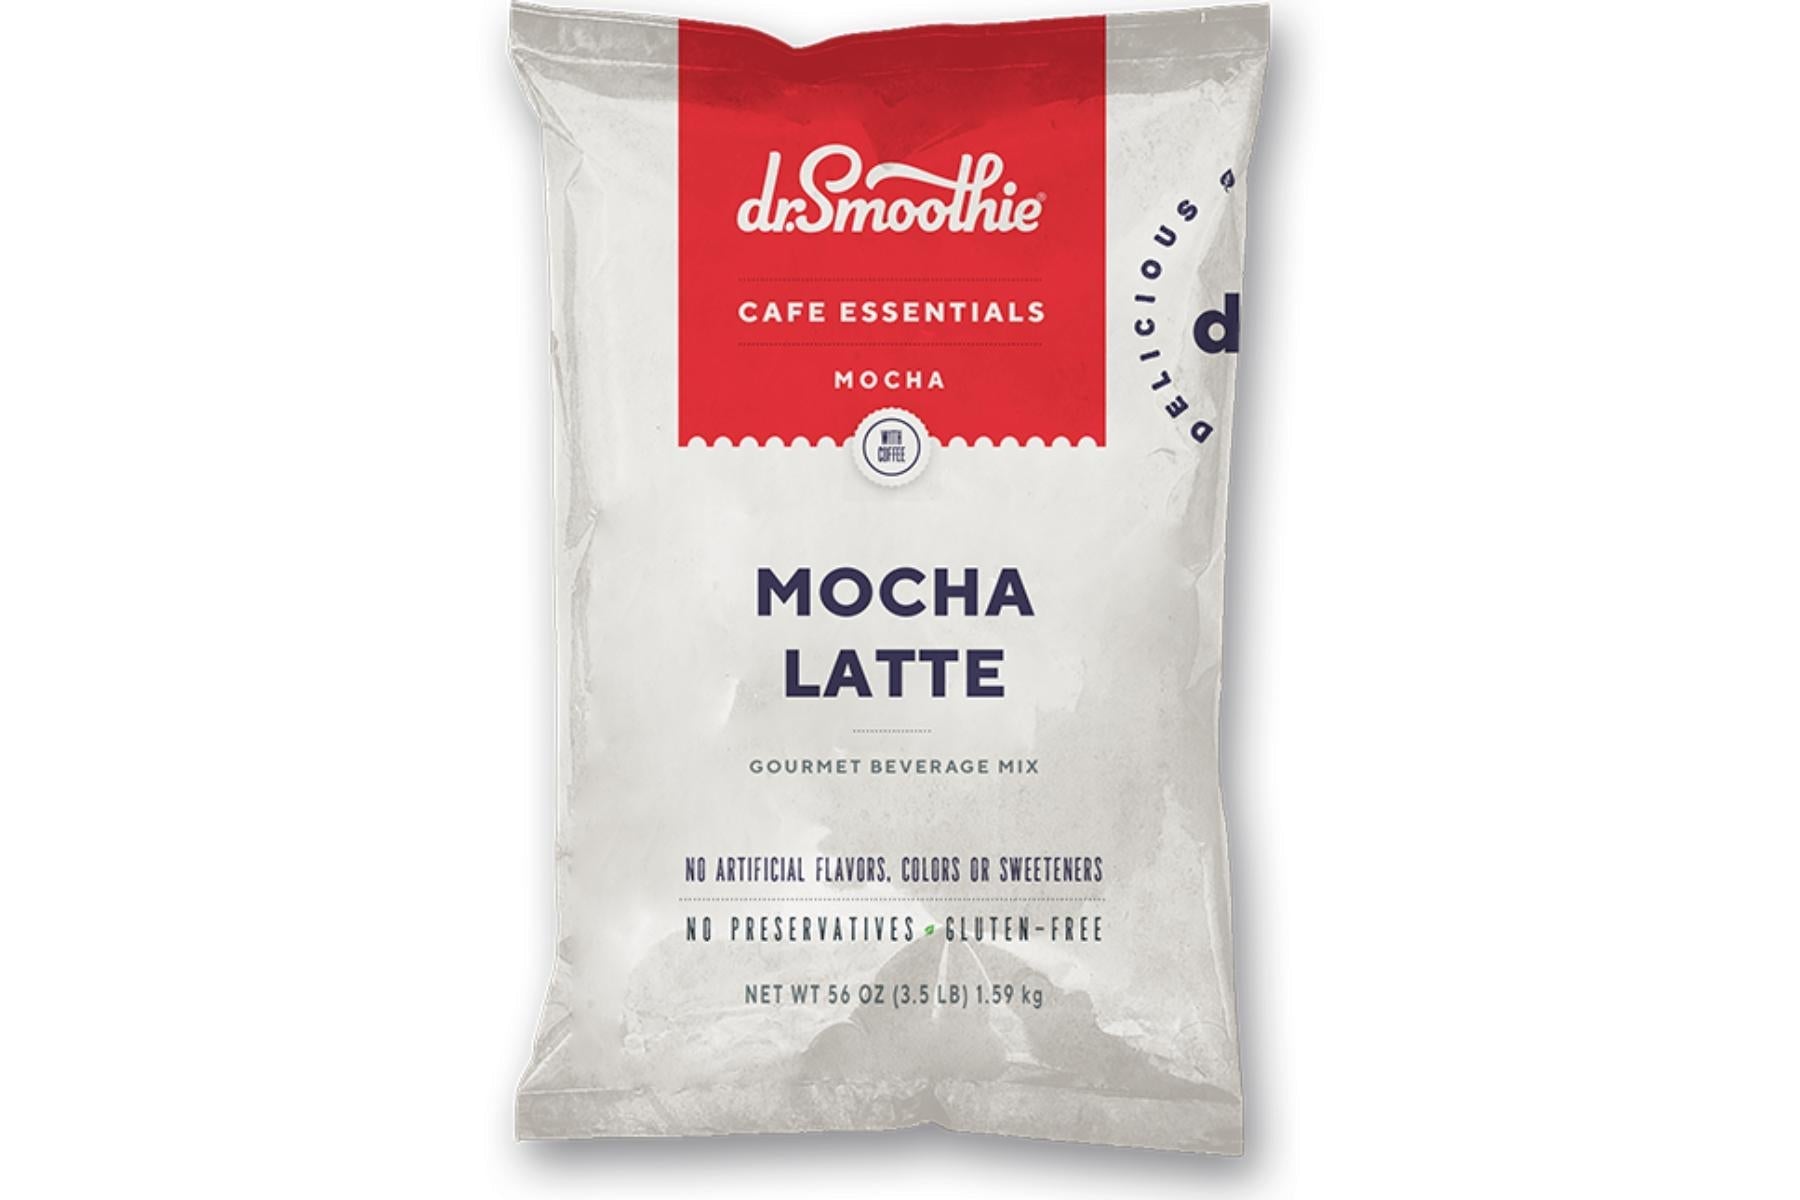 Dr. Smoothie Cafe Essentials Mocha - 25lb Bulk Box: Mocha Latte